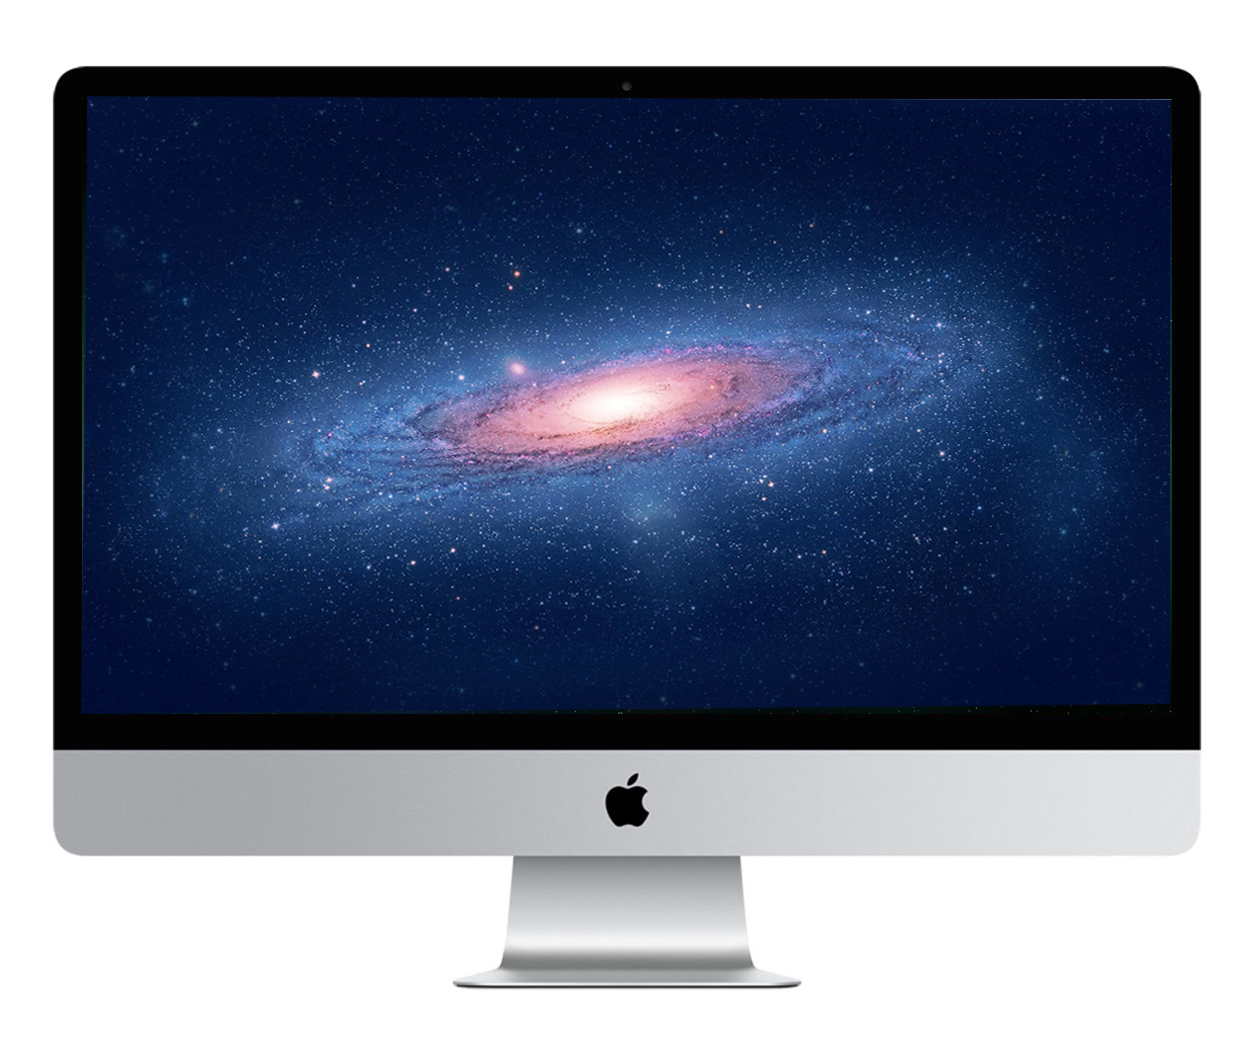 Apple iMac 21.5 inch A1311 Late 2011 Model